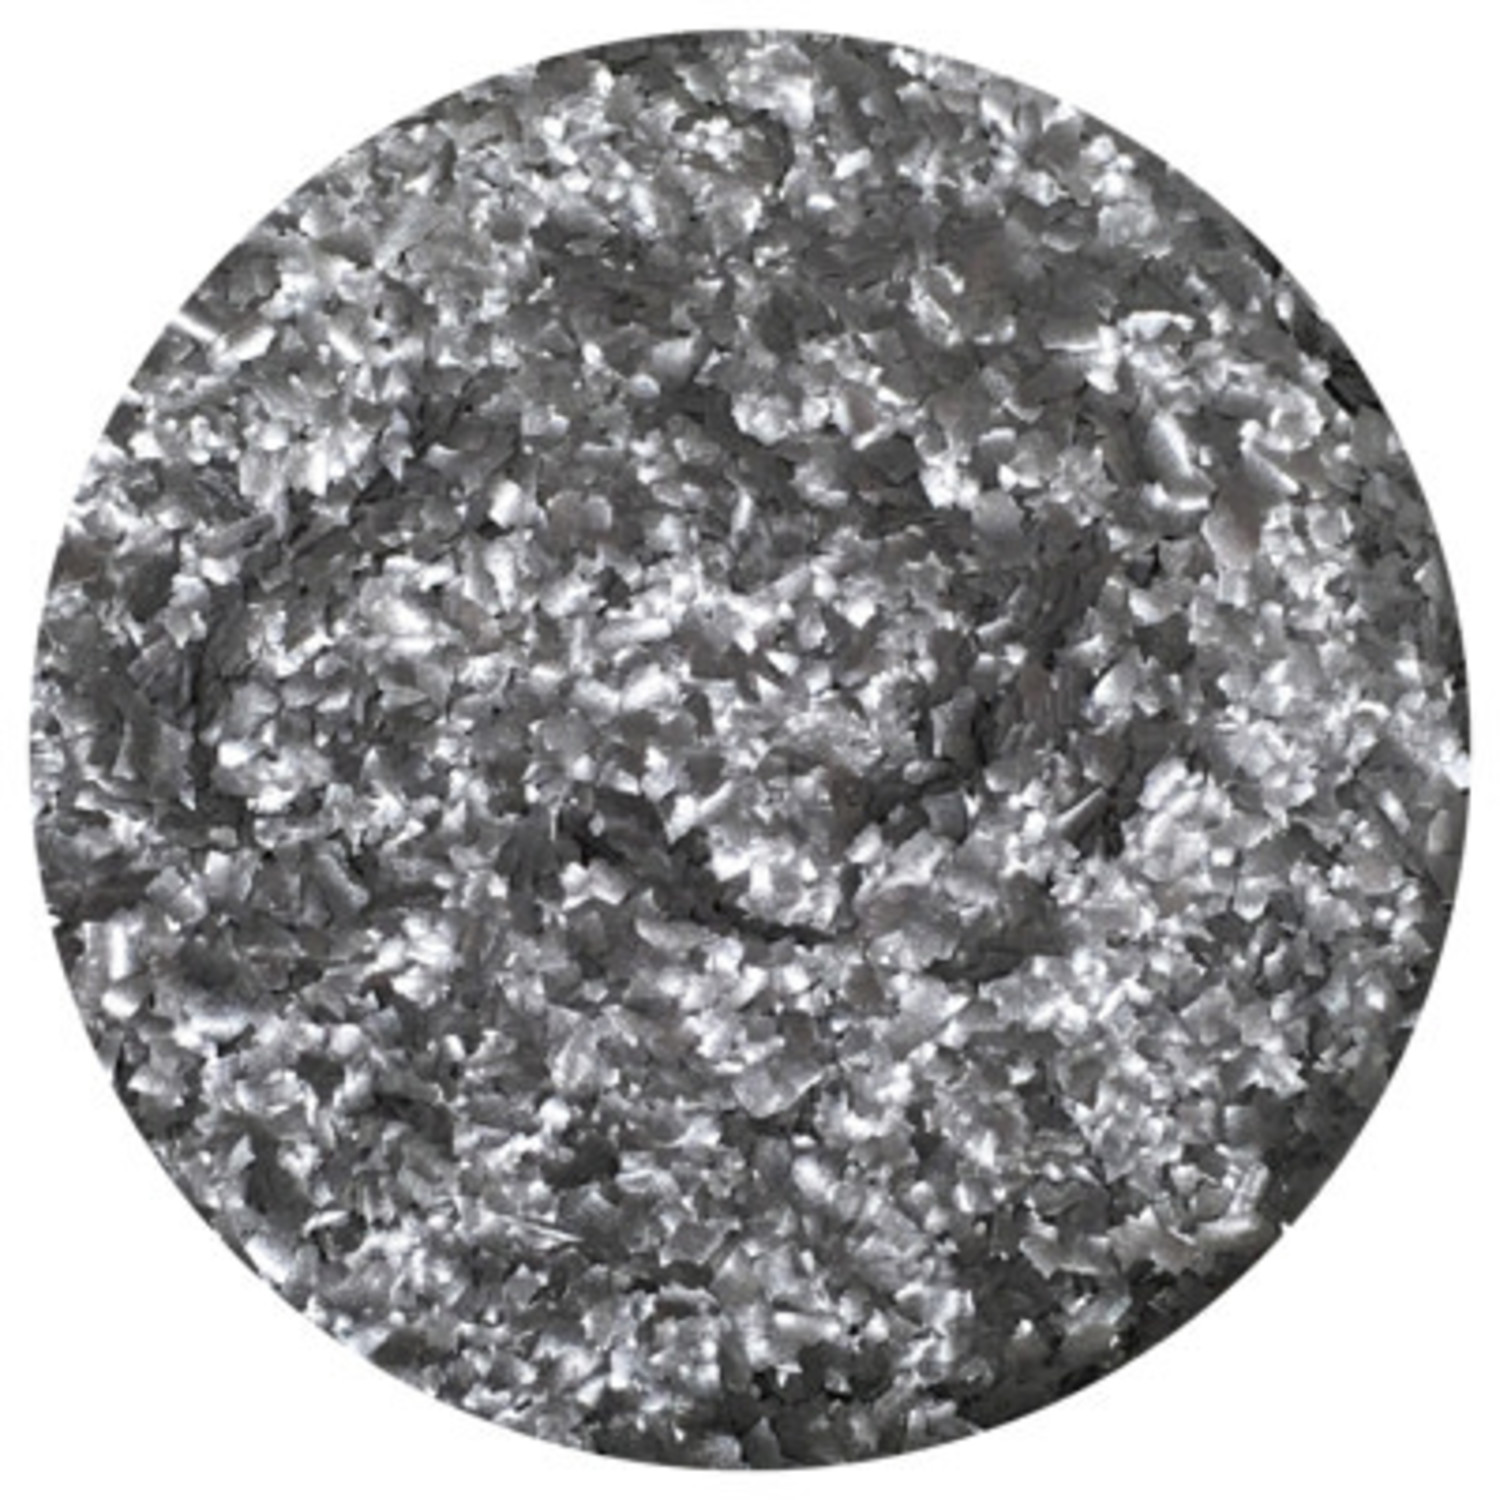 edible glitter, silver 1oz - Whisk